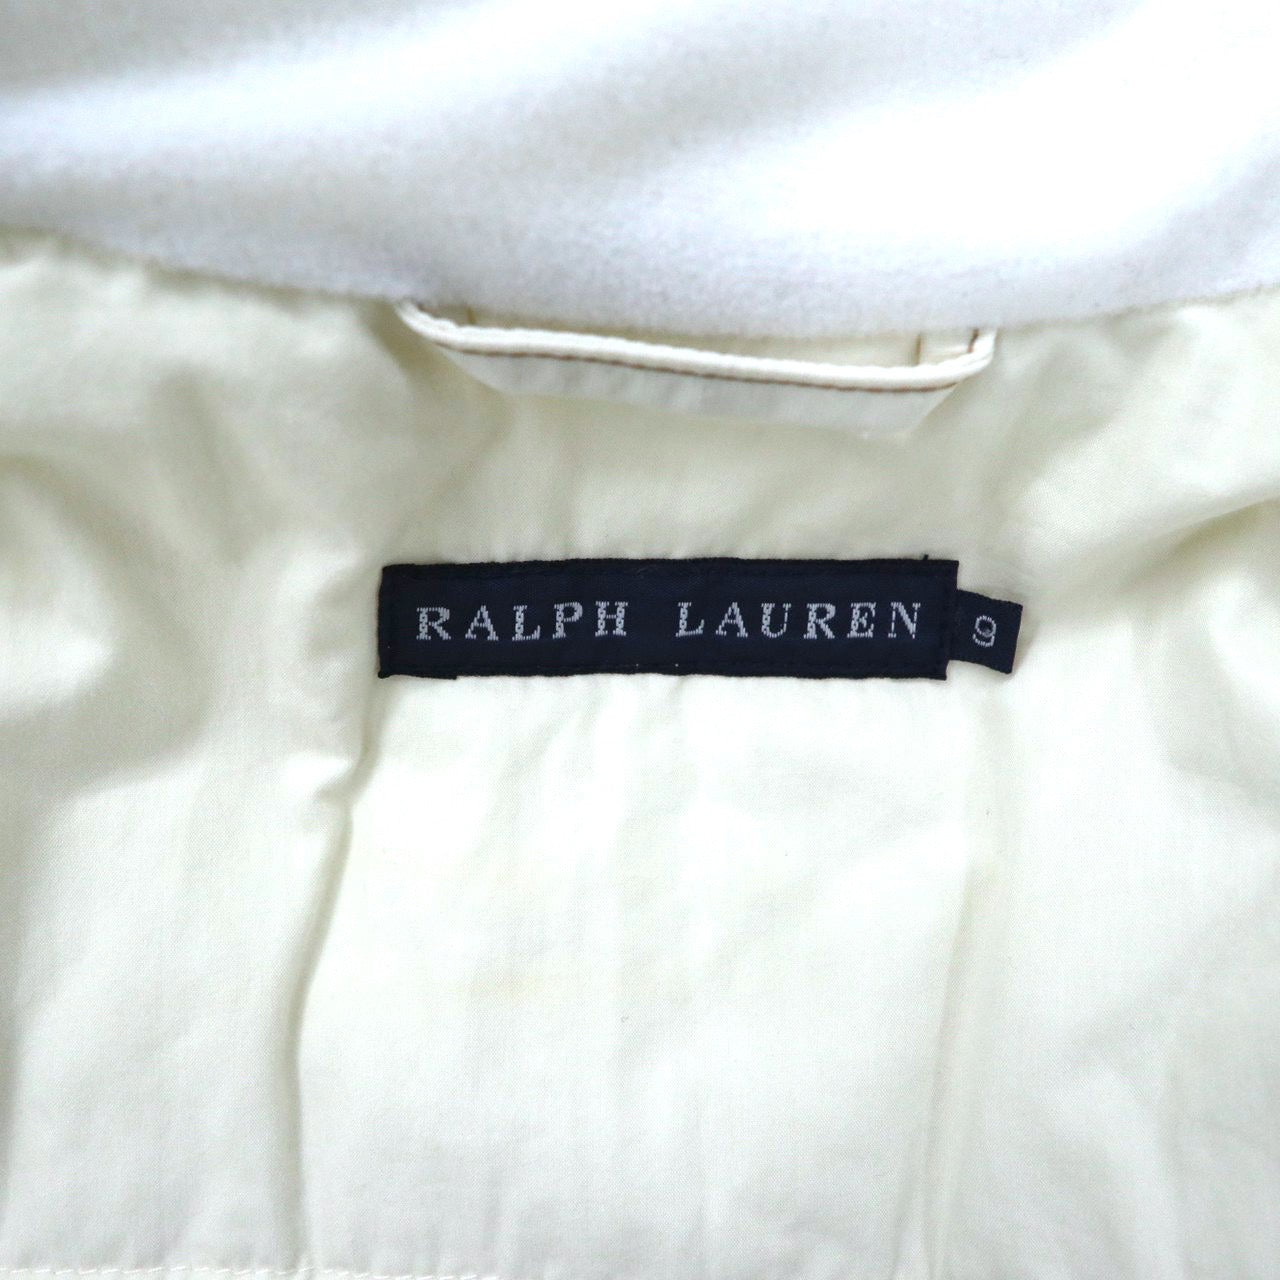 RALPH LAUREN サファリジャケット 9 ホワイト PRIMALOFT ナイロン 中綿 ベルト付き